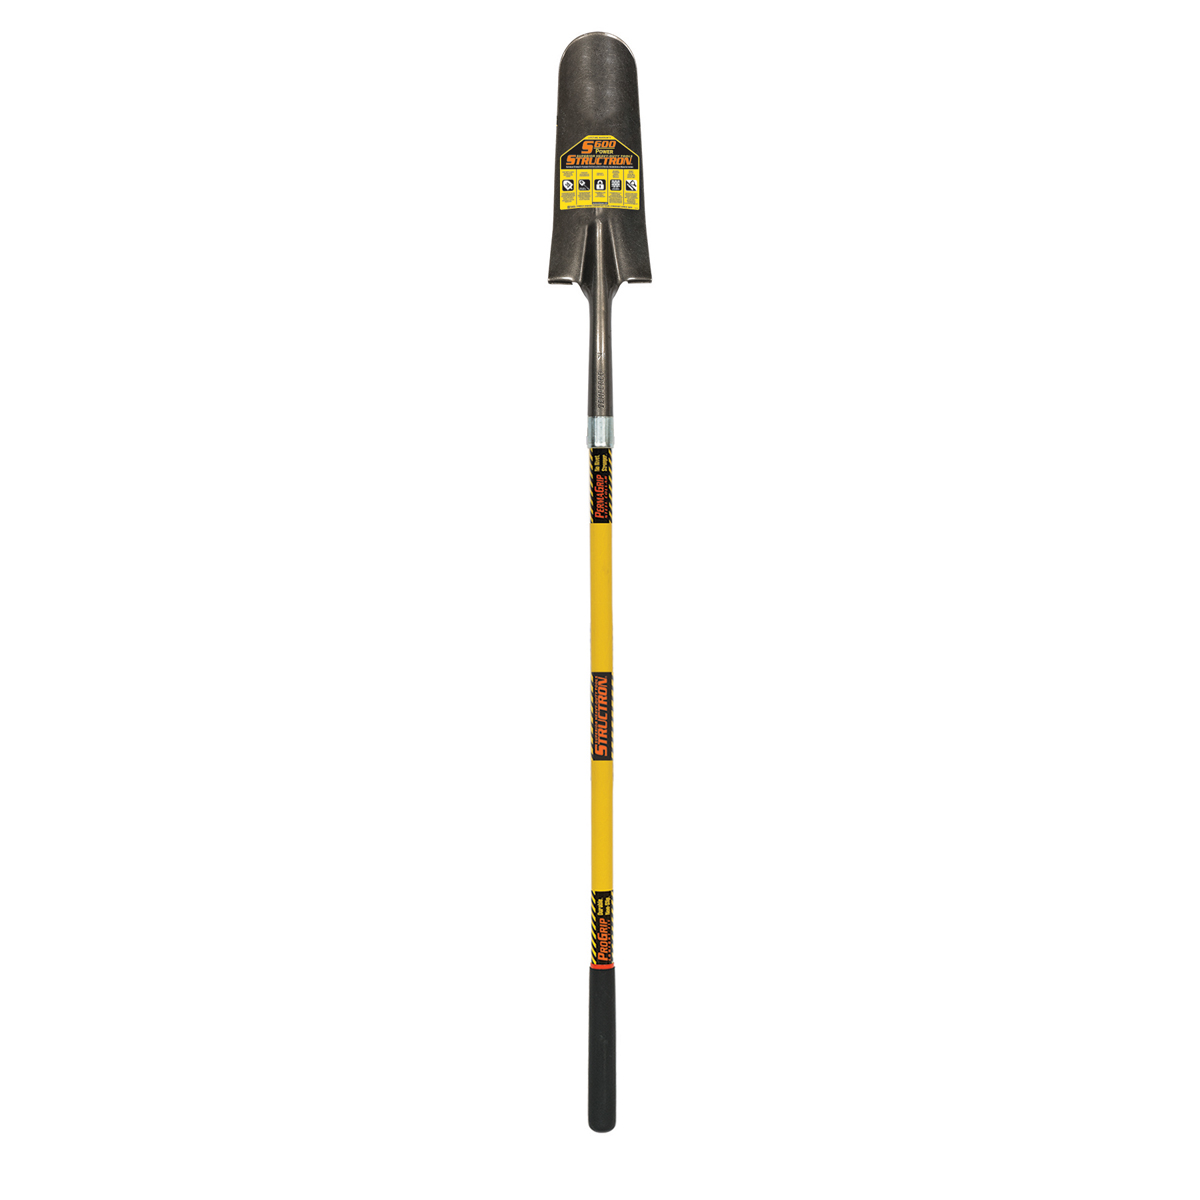 Structron Drain Spade 14 Gauge Shovel with Premium Fiberglass Handle Various Size and Style